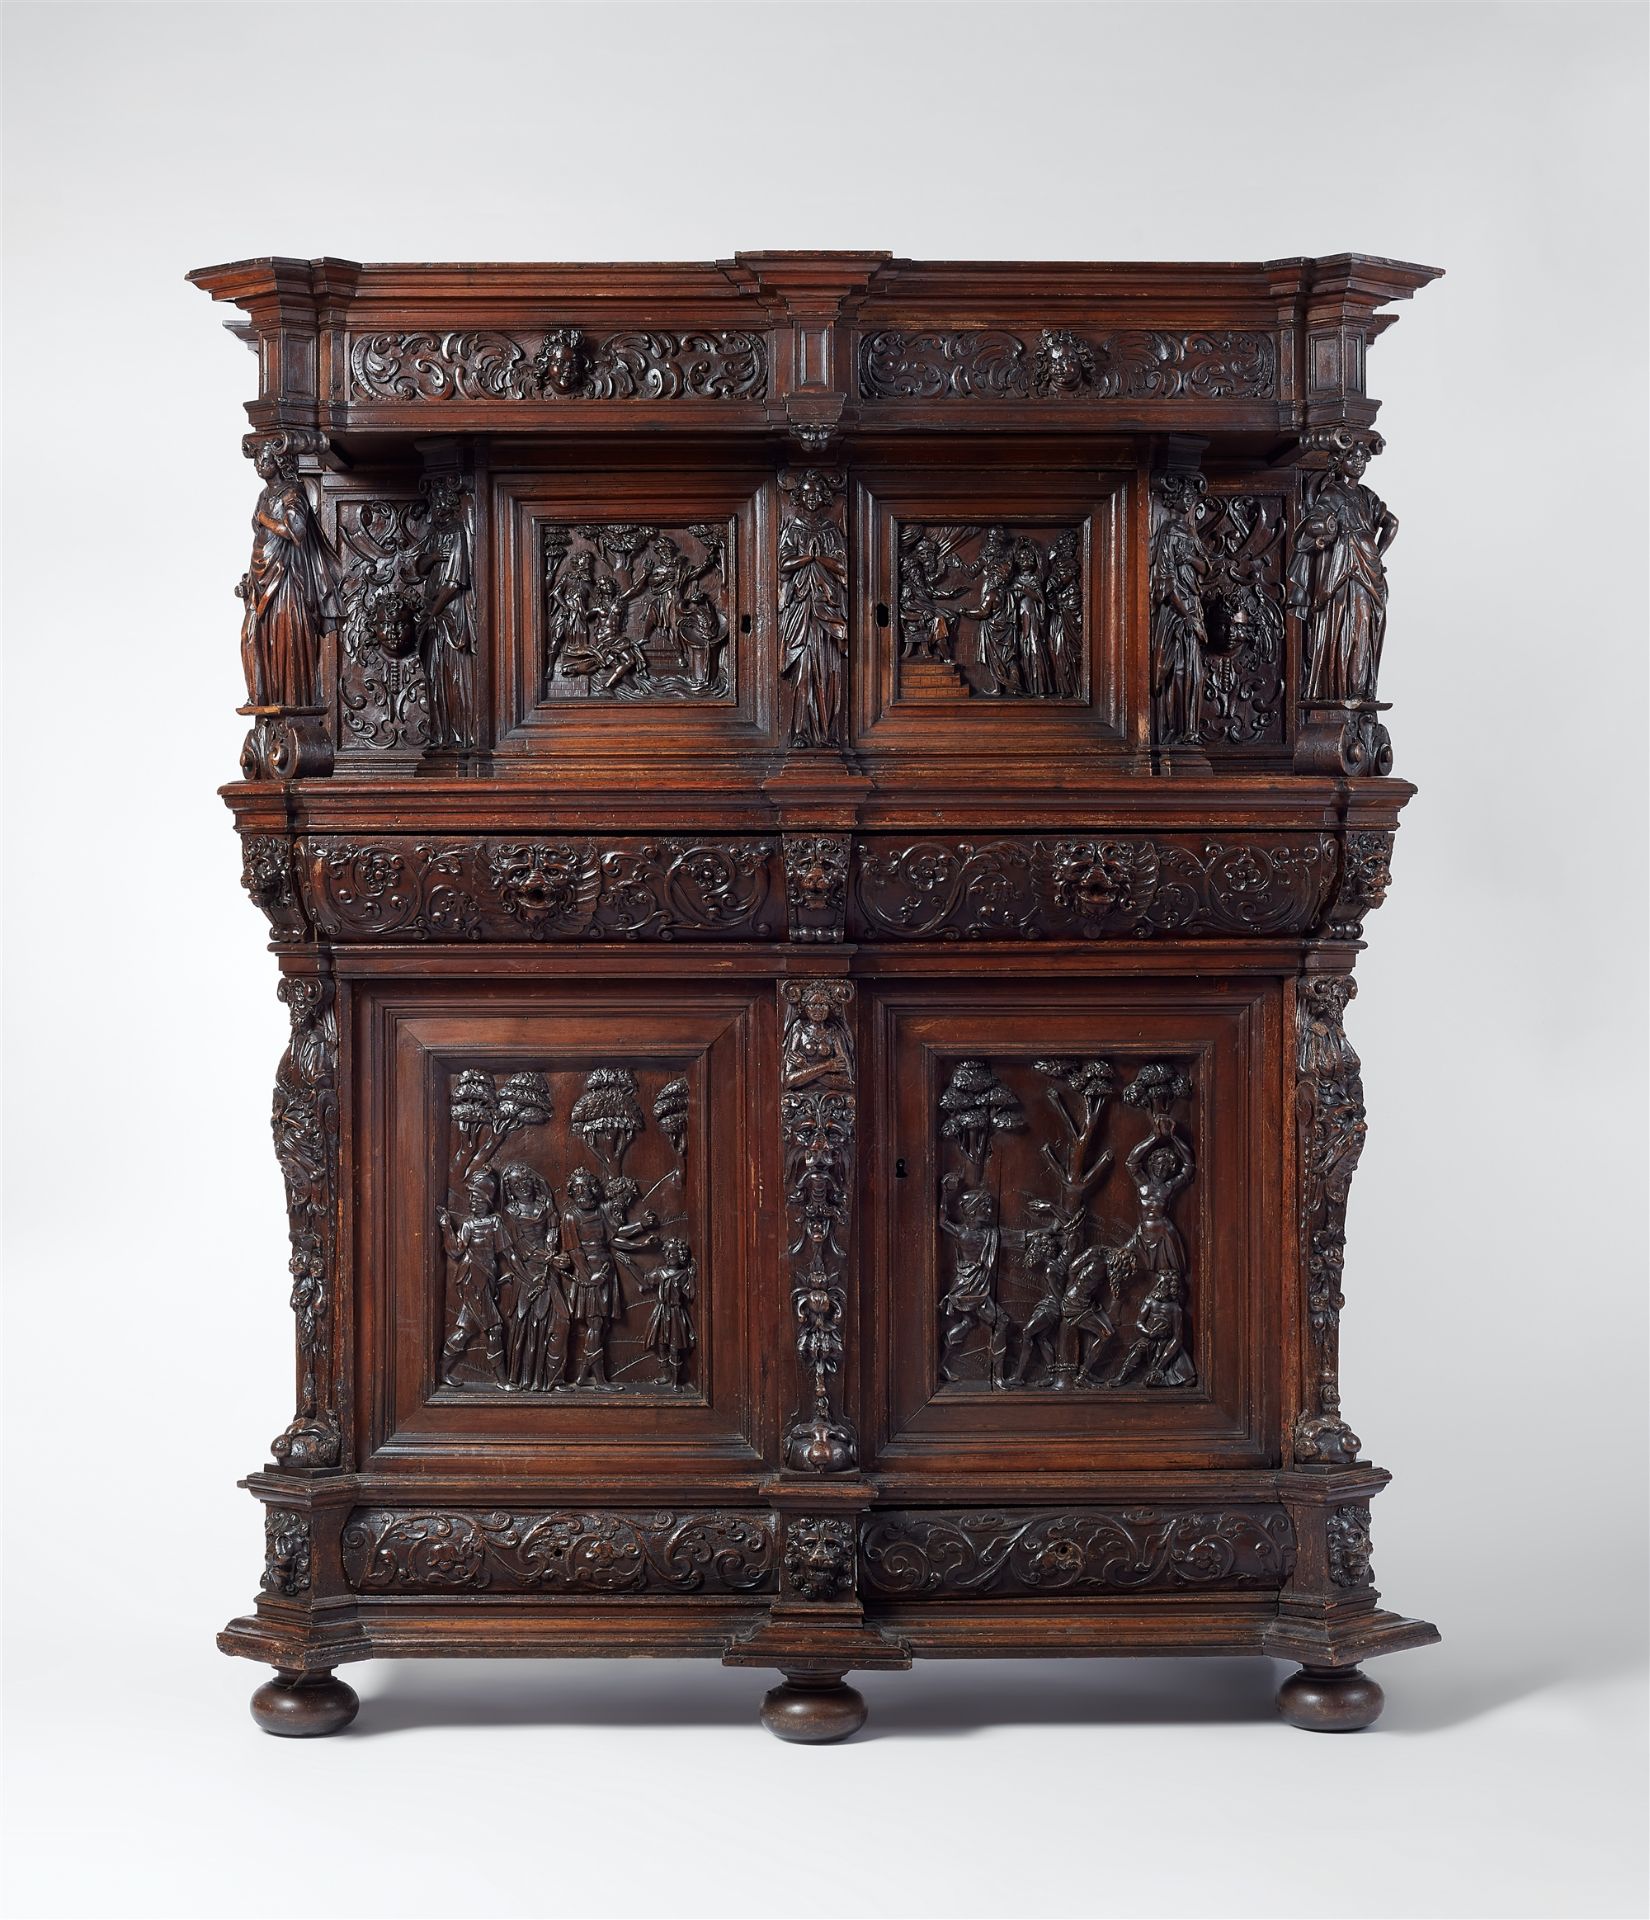 The Cologne "Susanna Cabinet"